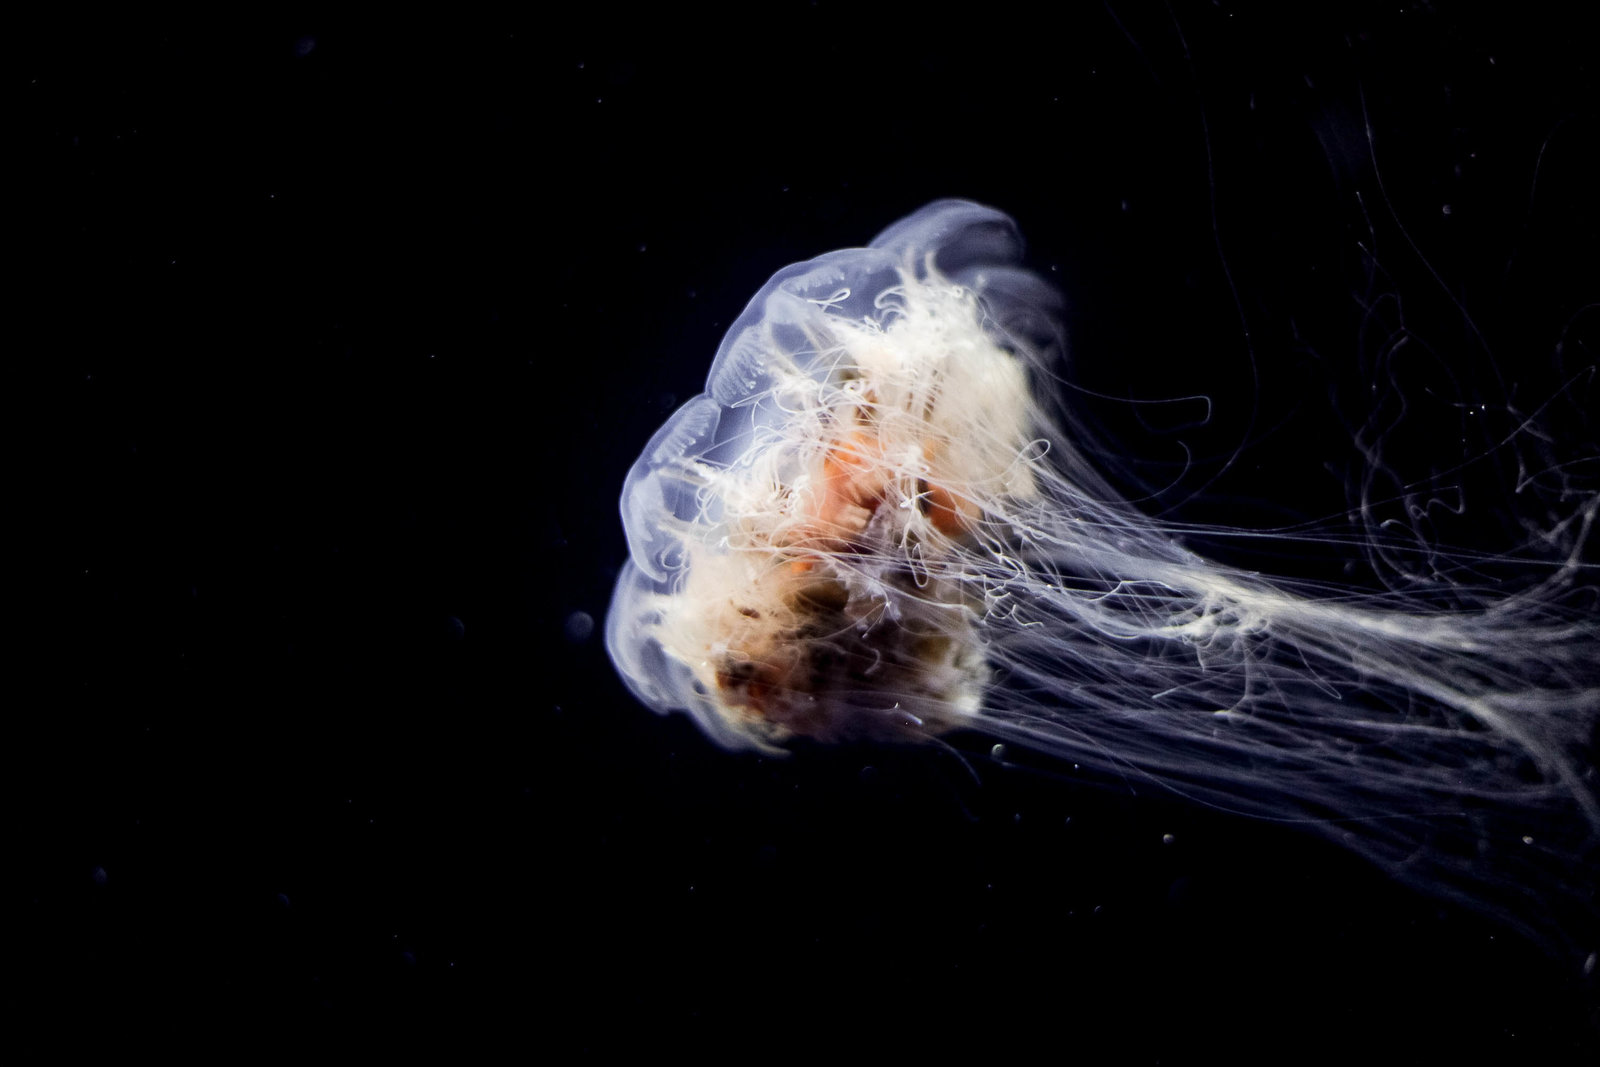 jellyfish-aquatic-life-nature-kate-timbers-photography-1555